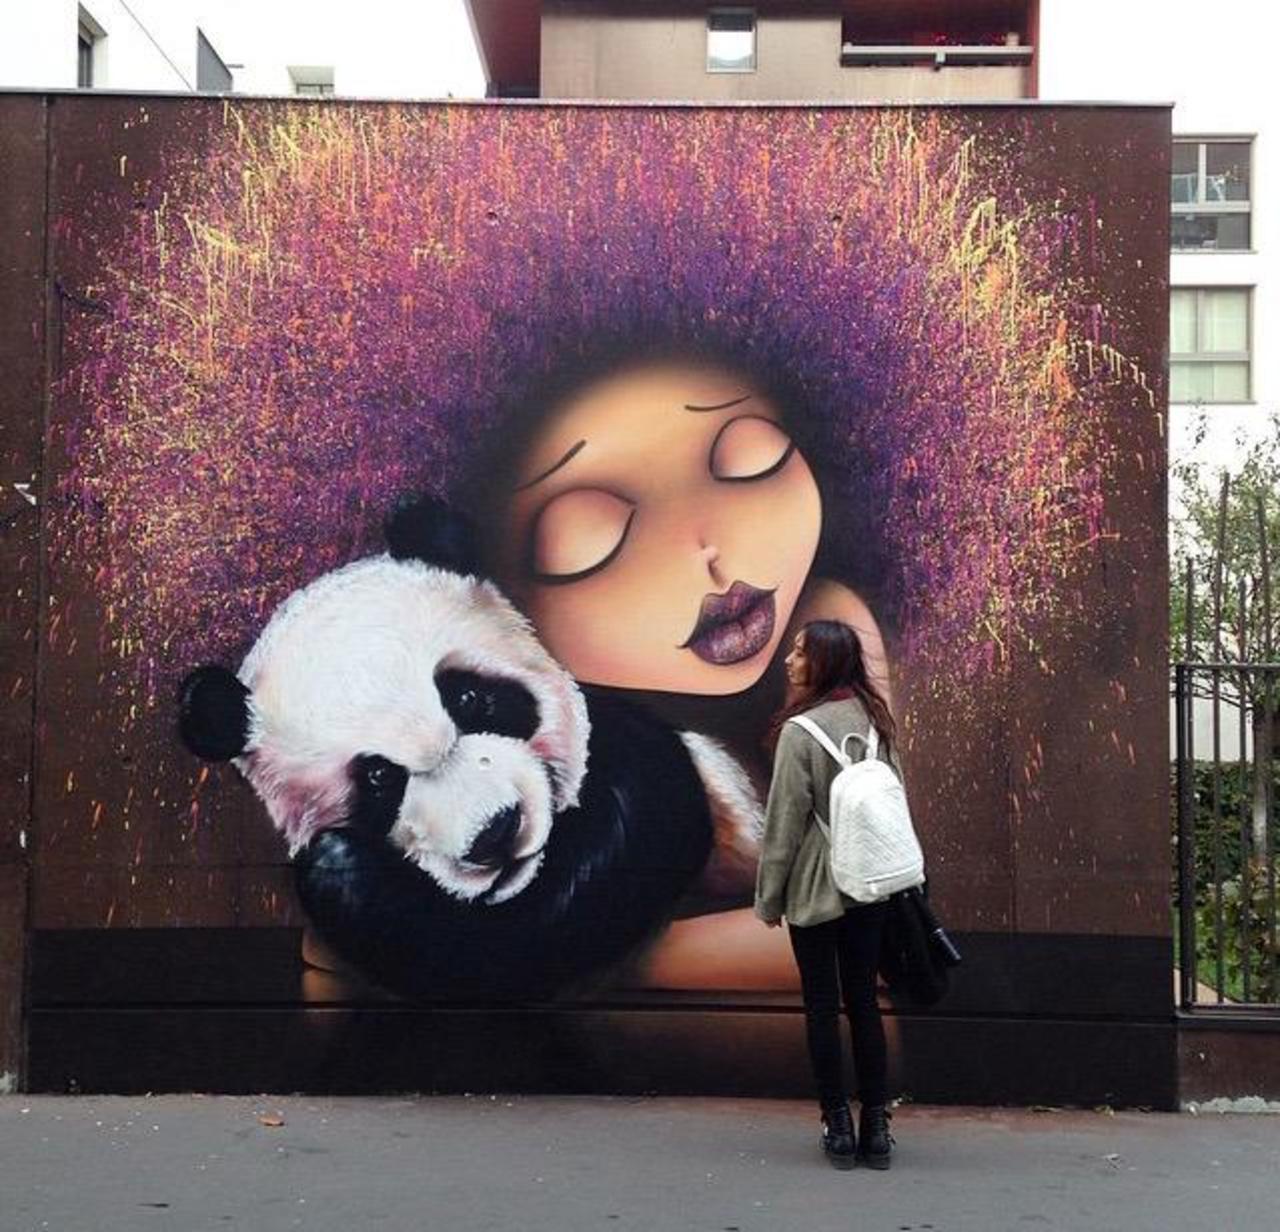 RT @charlesjackso14: Street Art by VinieGraffiti in Paris 

#art #graffiti #mural #streetart http://t.co/X6cKTzxRPV http://twitter.com/GoogleStreetArt/status/654014419924557824/photo/1/large?utm_source=fb&utm_medium=fb&utm_campaign=charlesjackso14&utm_content=654281061782962176